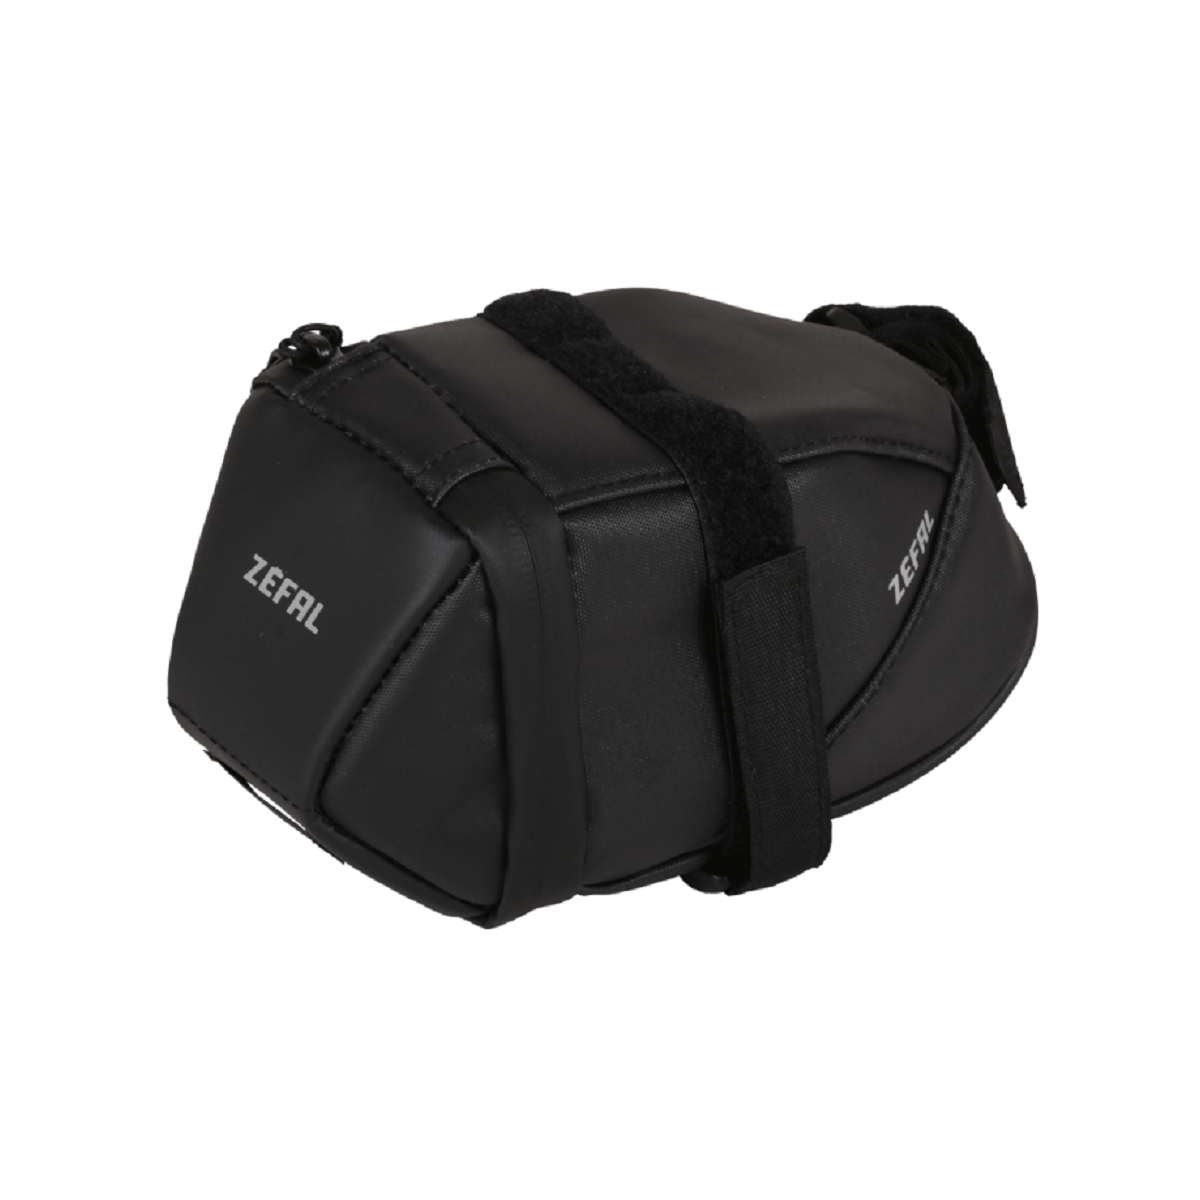 ZEFAL IRON PACK 2 M-DS 0.9L saddle bag - black